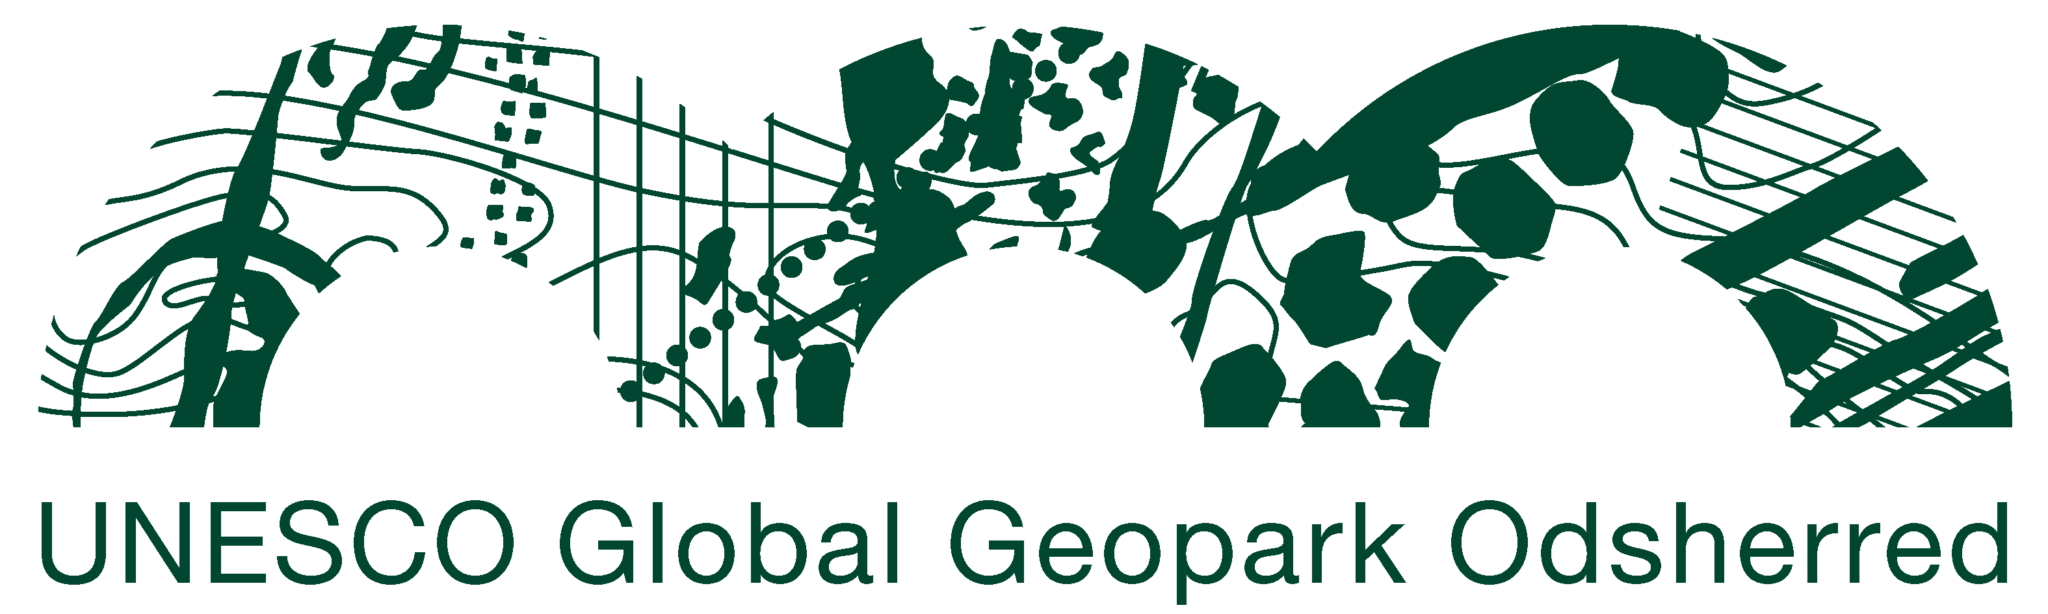 geoparkodsherred_logo